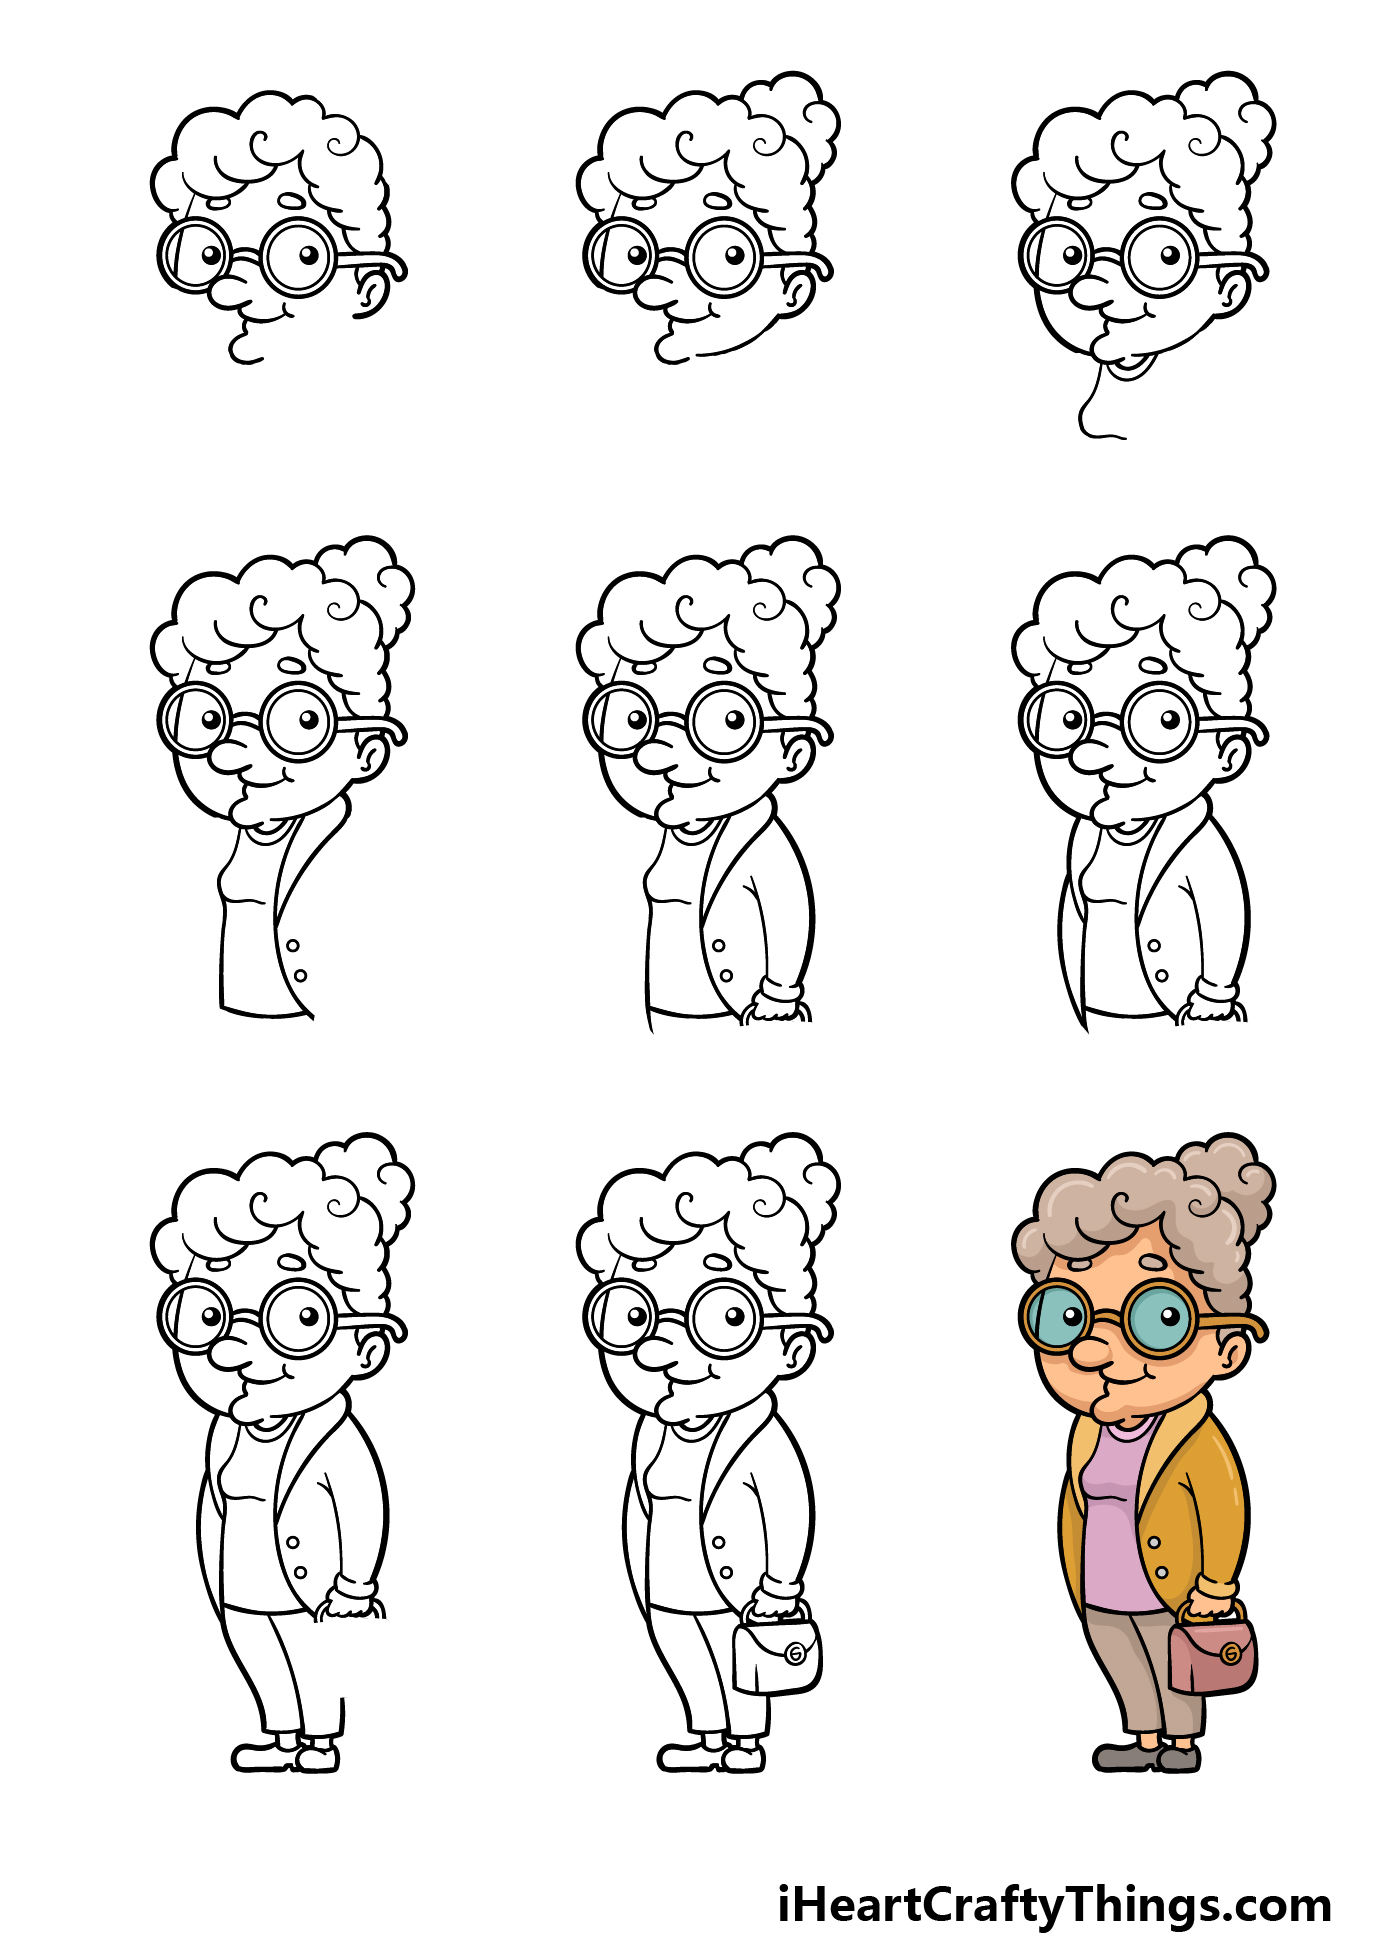 how to draw a cartoon grandma in 9 steps